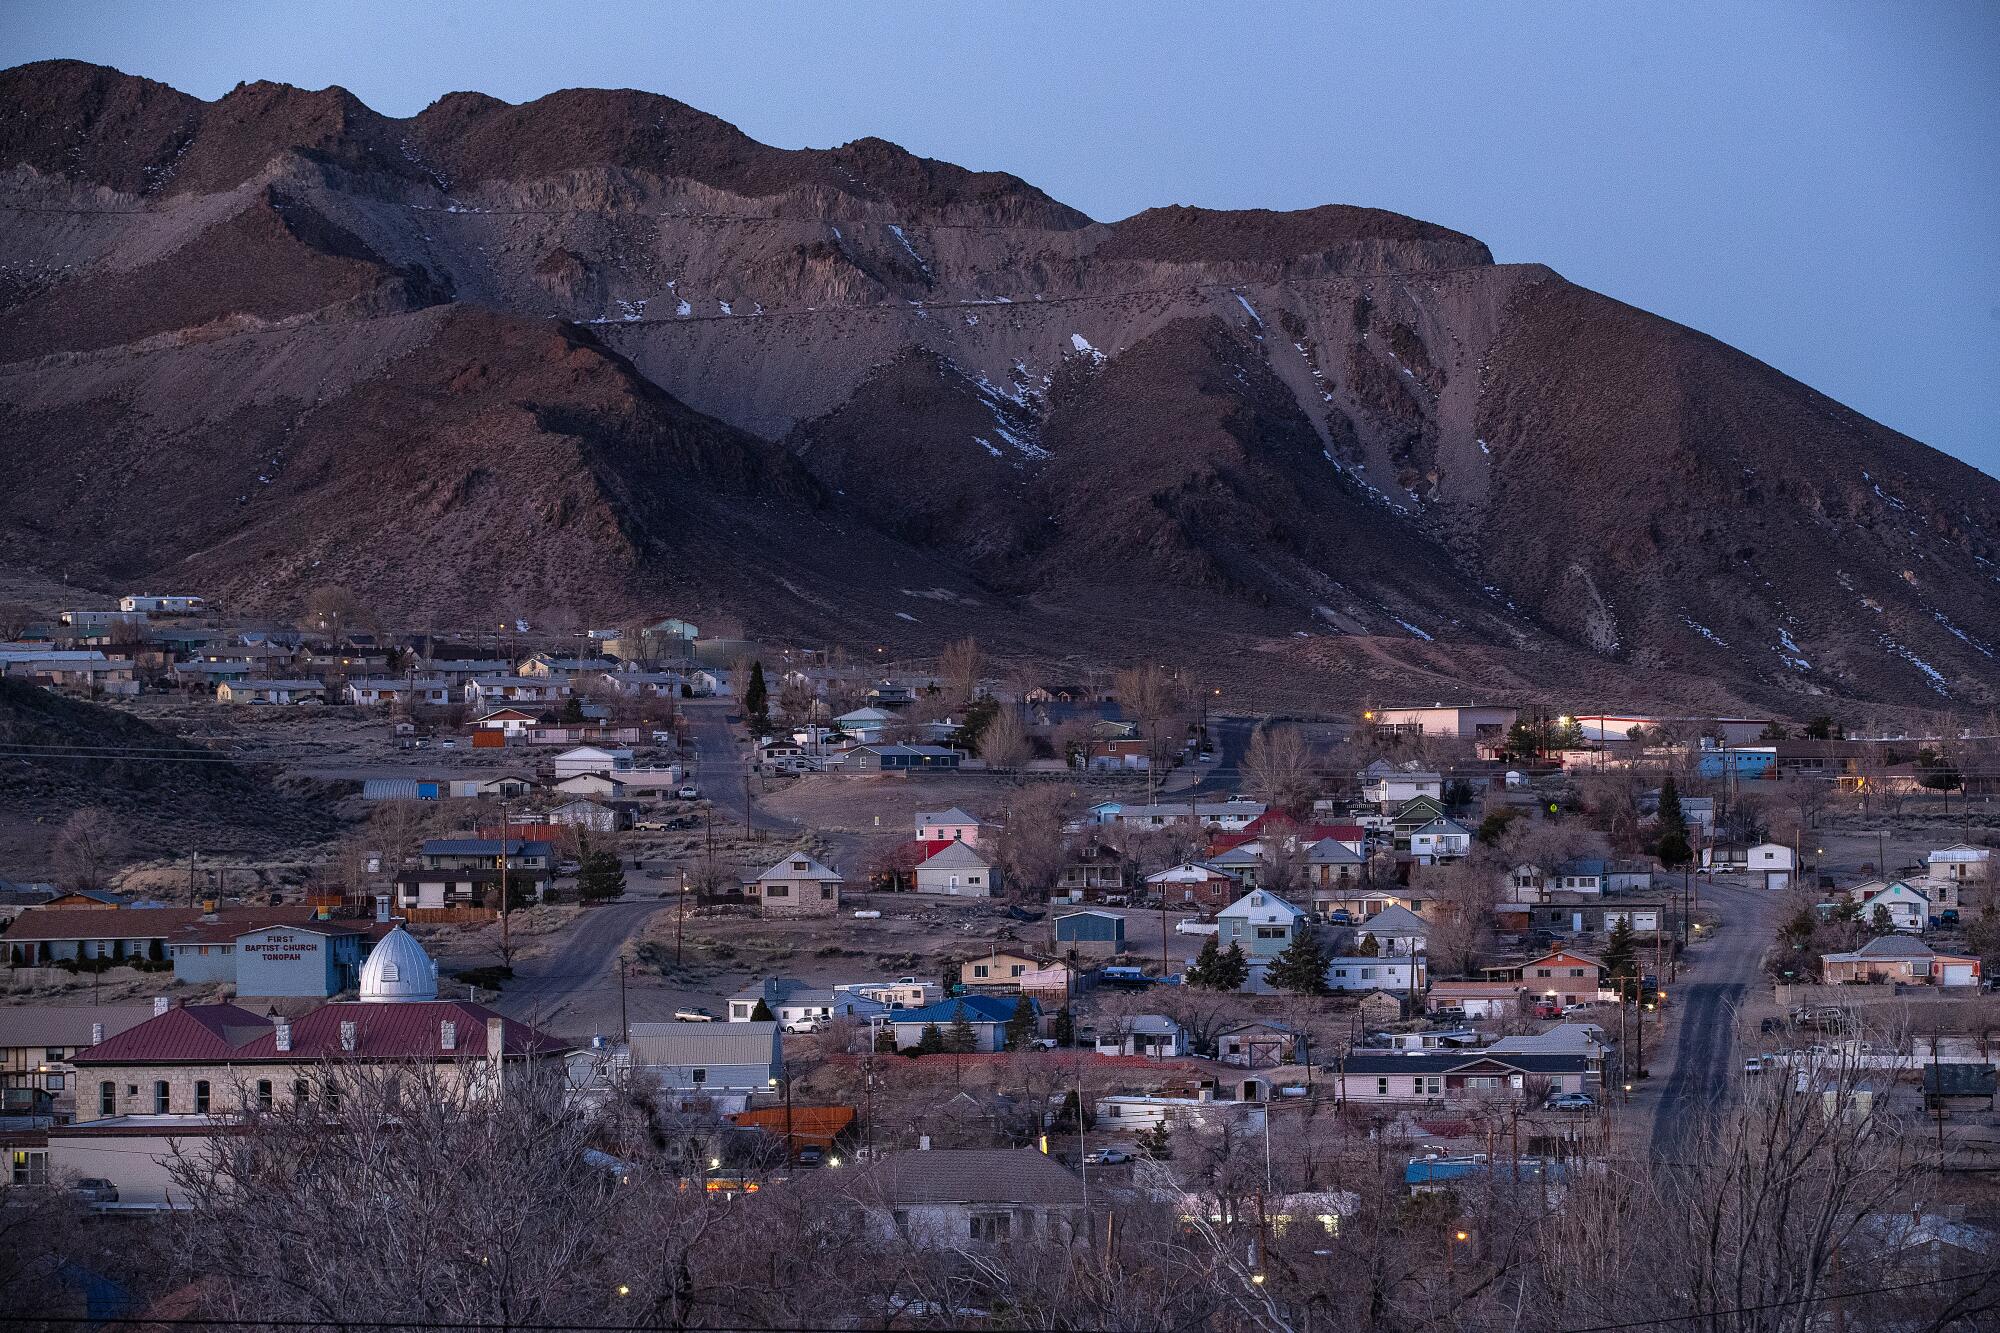 No presidential candidates have visited Tonopah, Nev., halfway between Reno and Las Vegas.